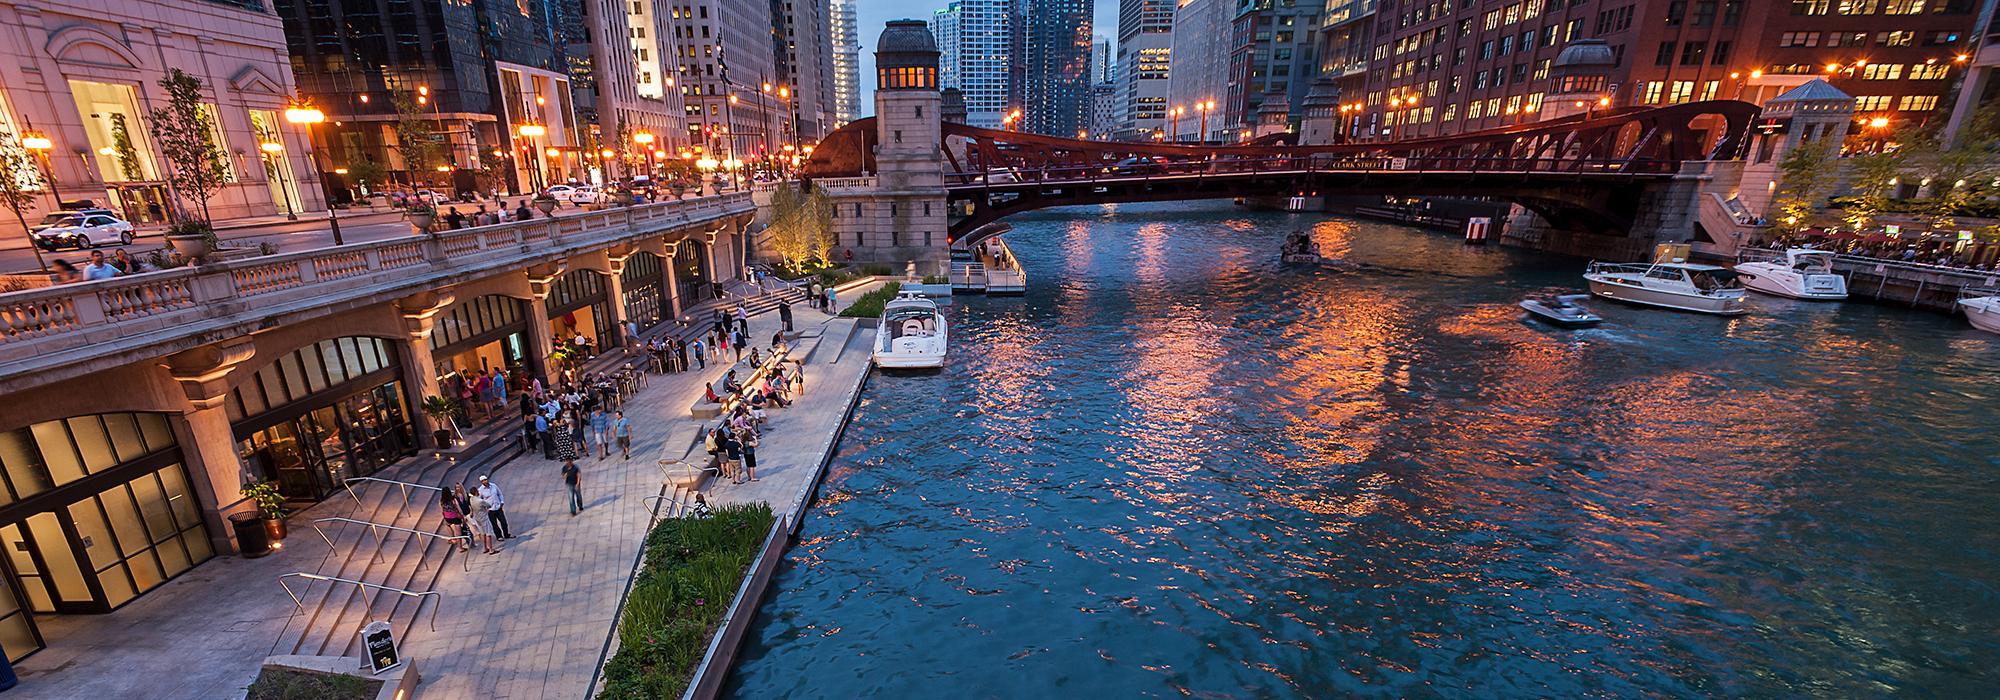 Chicago Riverwalk: Cohesive yet distinct blocks allow for diverse experiences.